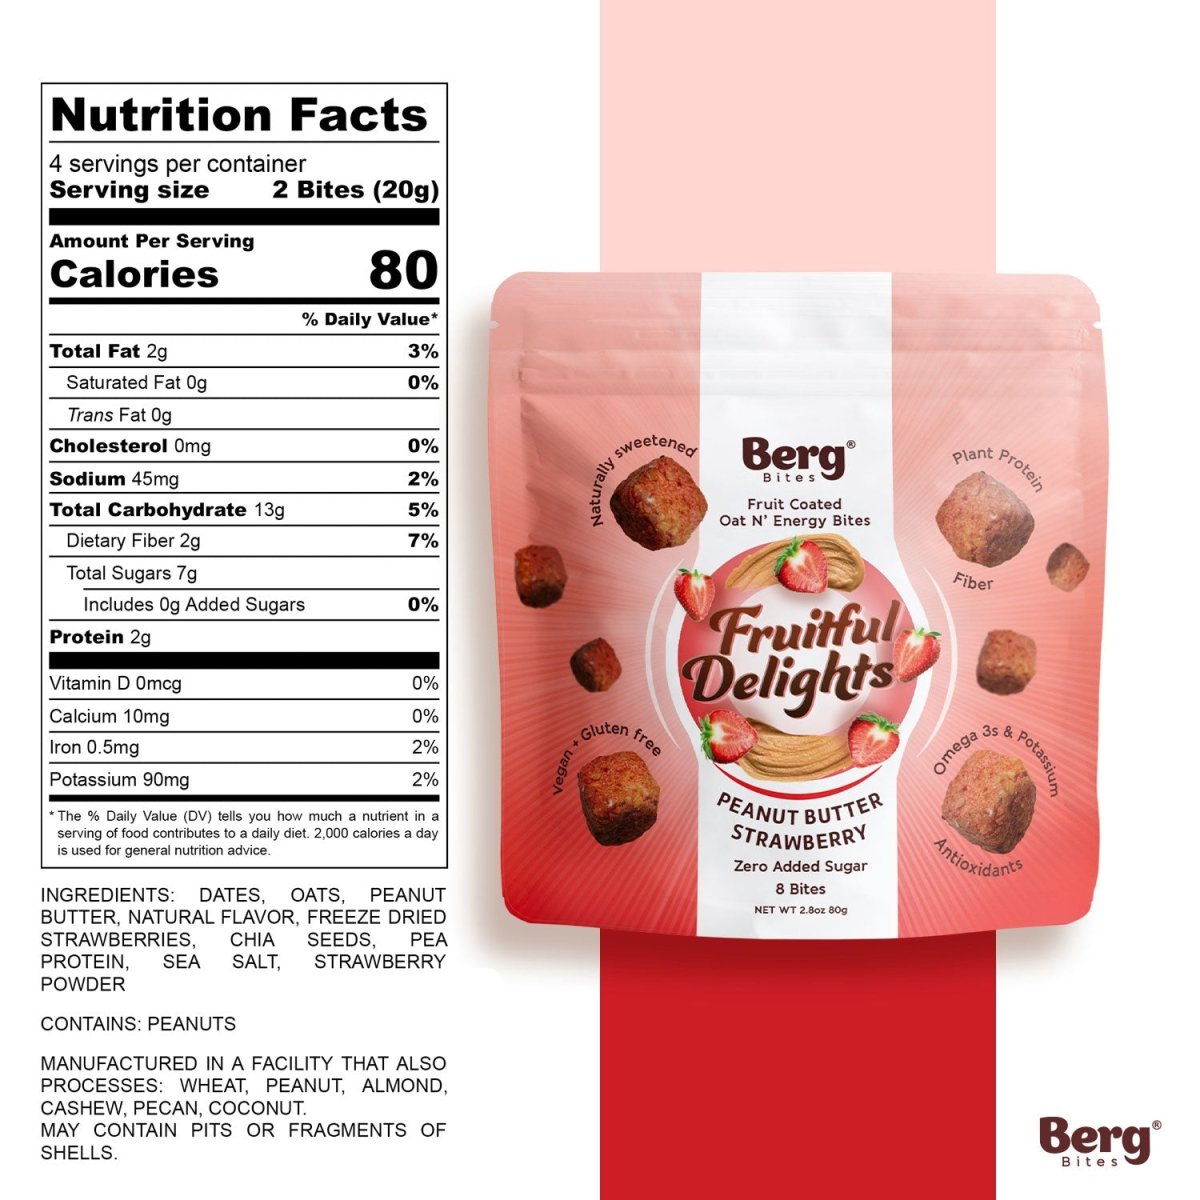 Fruitful Delights - Strawberry Peanut Butter - Berg Bites - Clean Energy